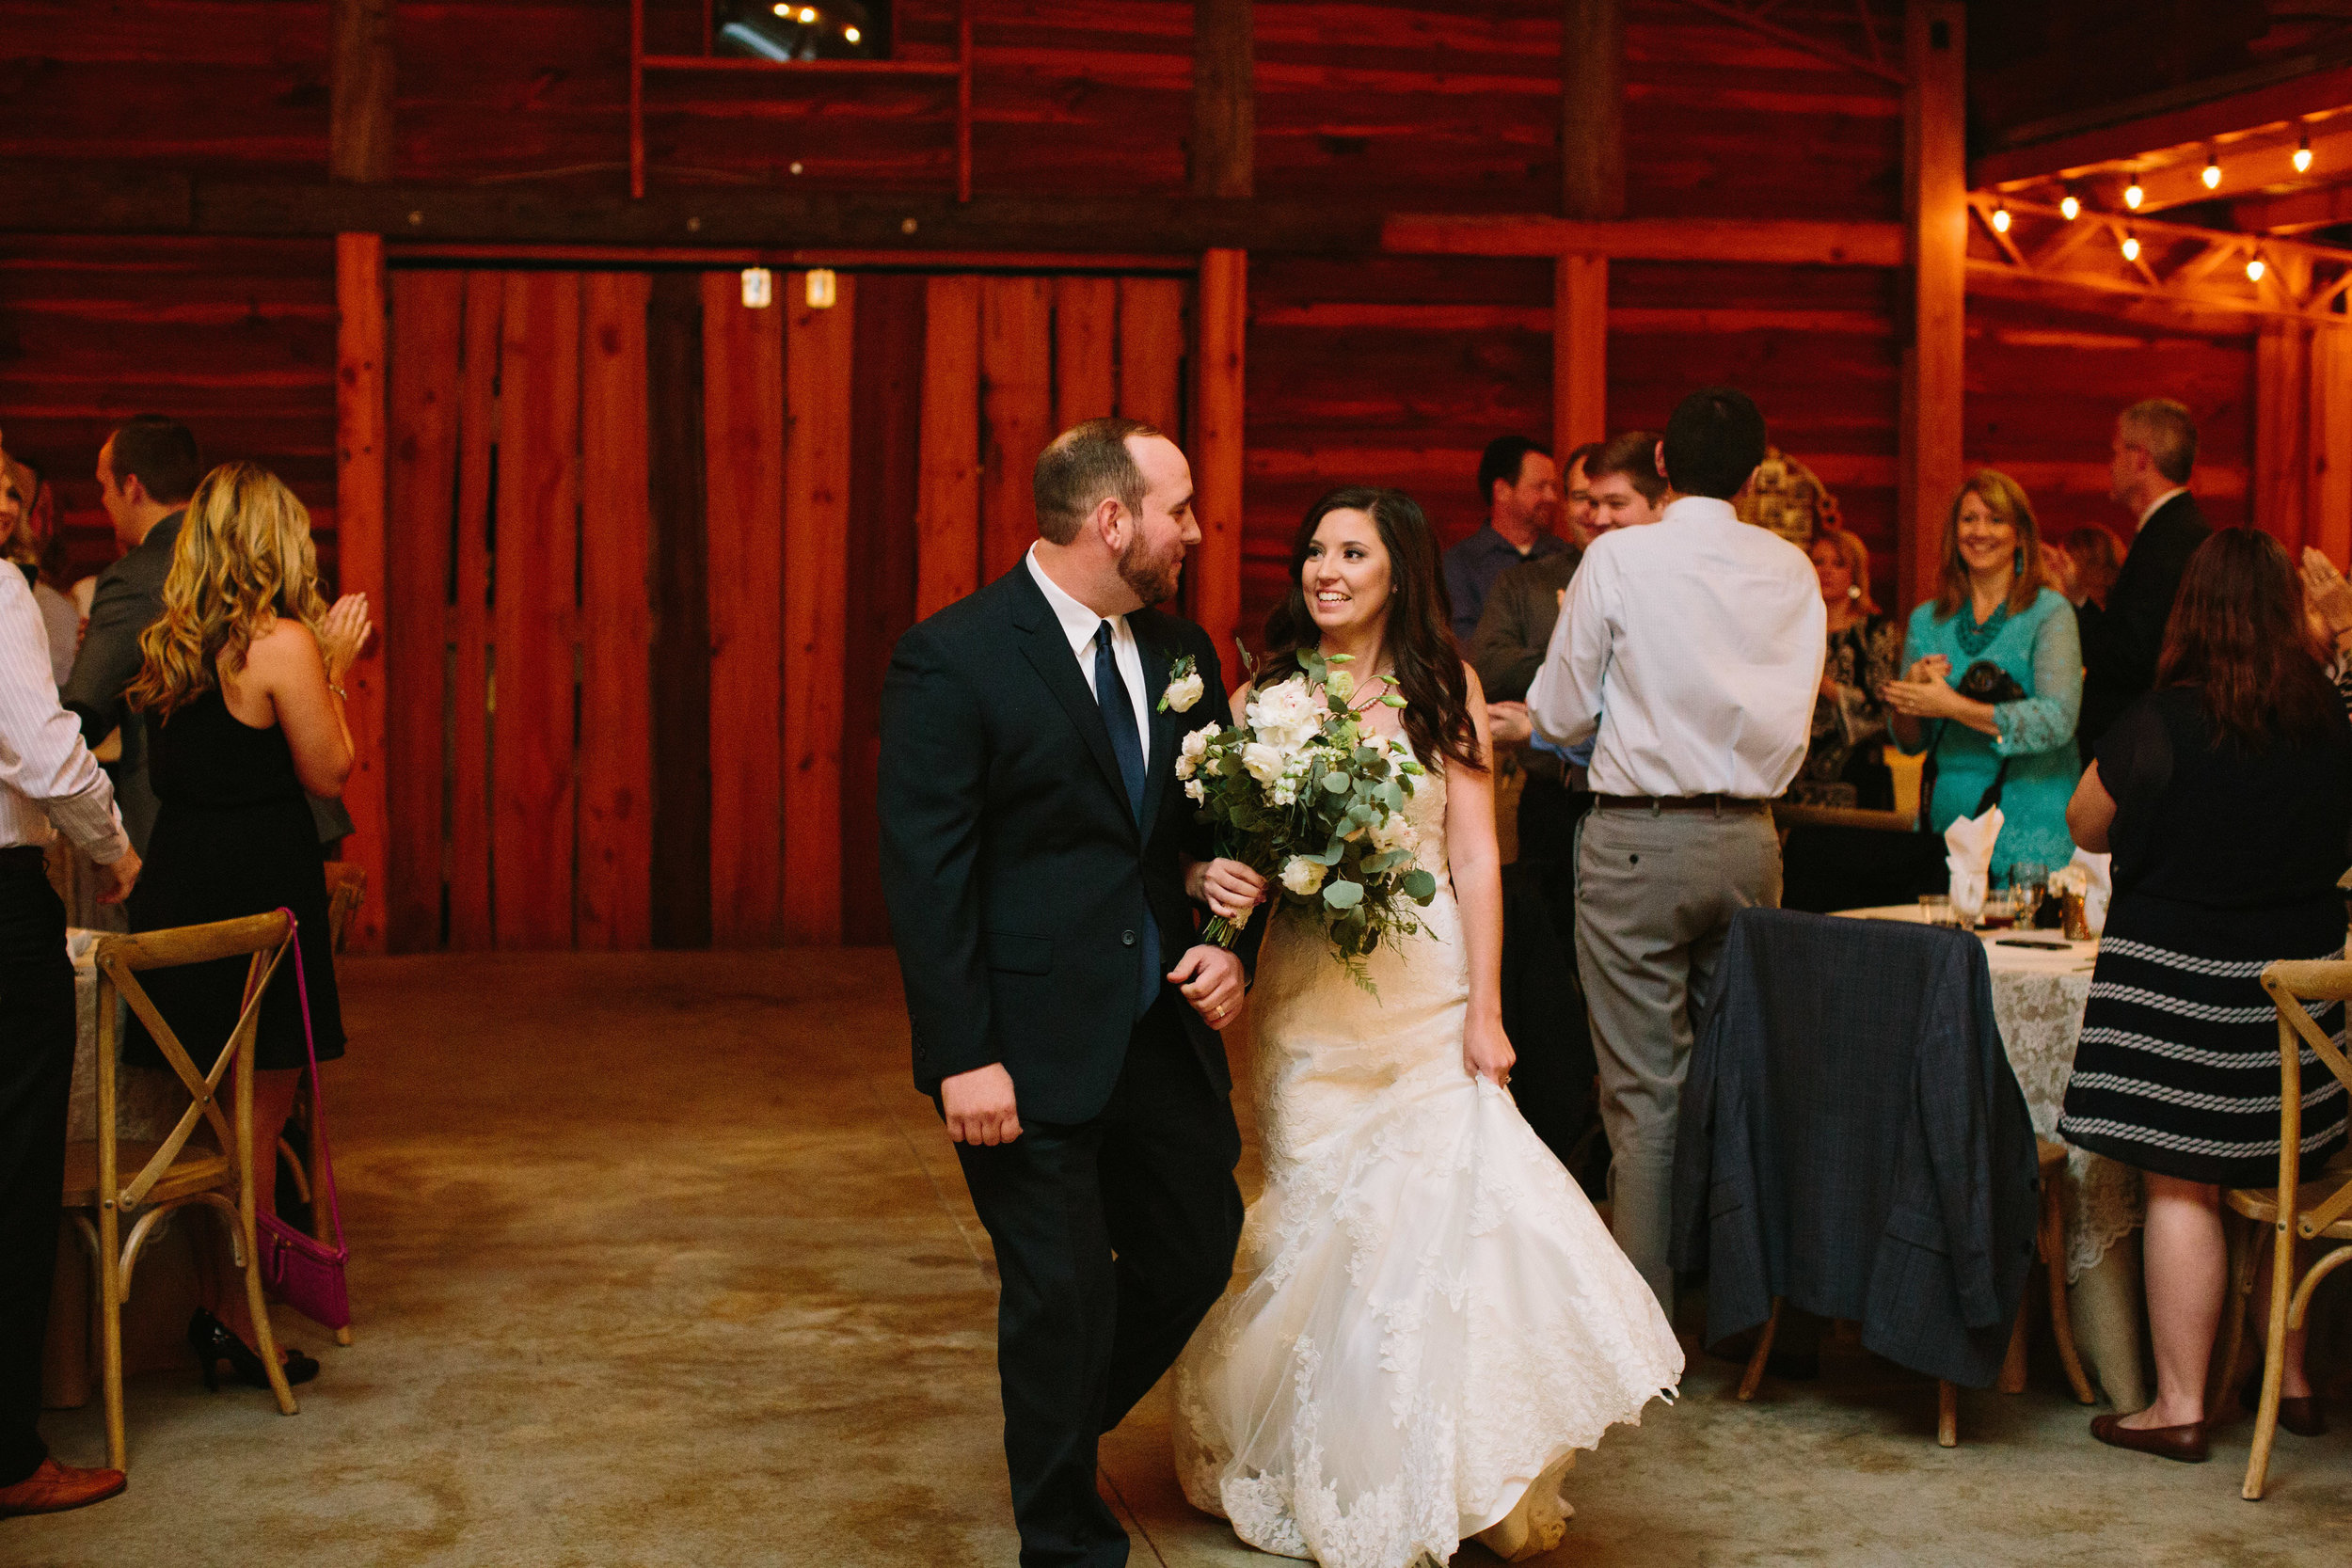 Reception | Florida Rustic Barn Weddings | Plant City, Florida Wedding Photography | Benjamin Hewitt Photographer